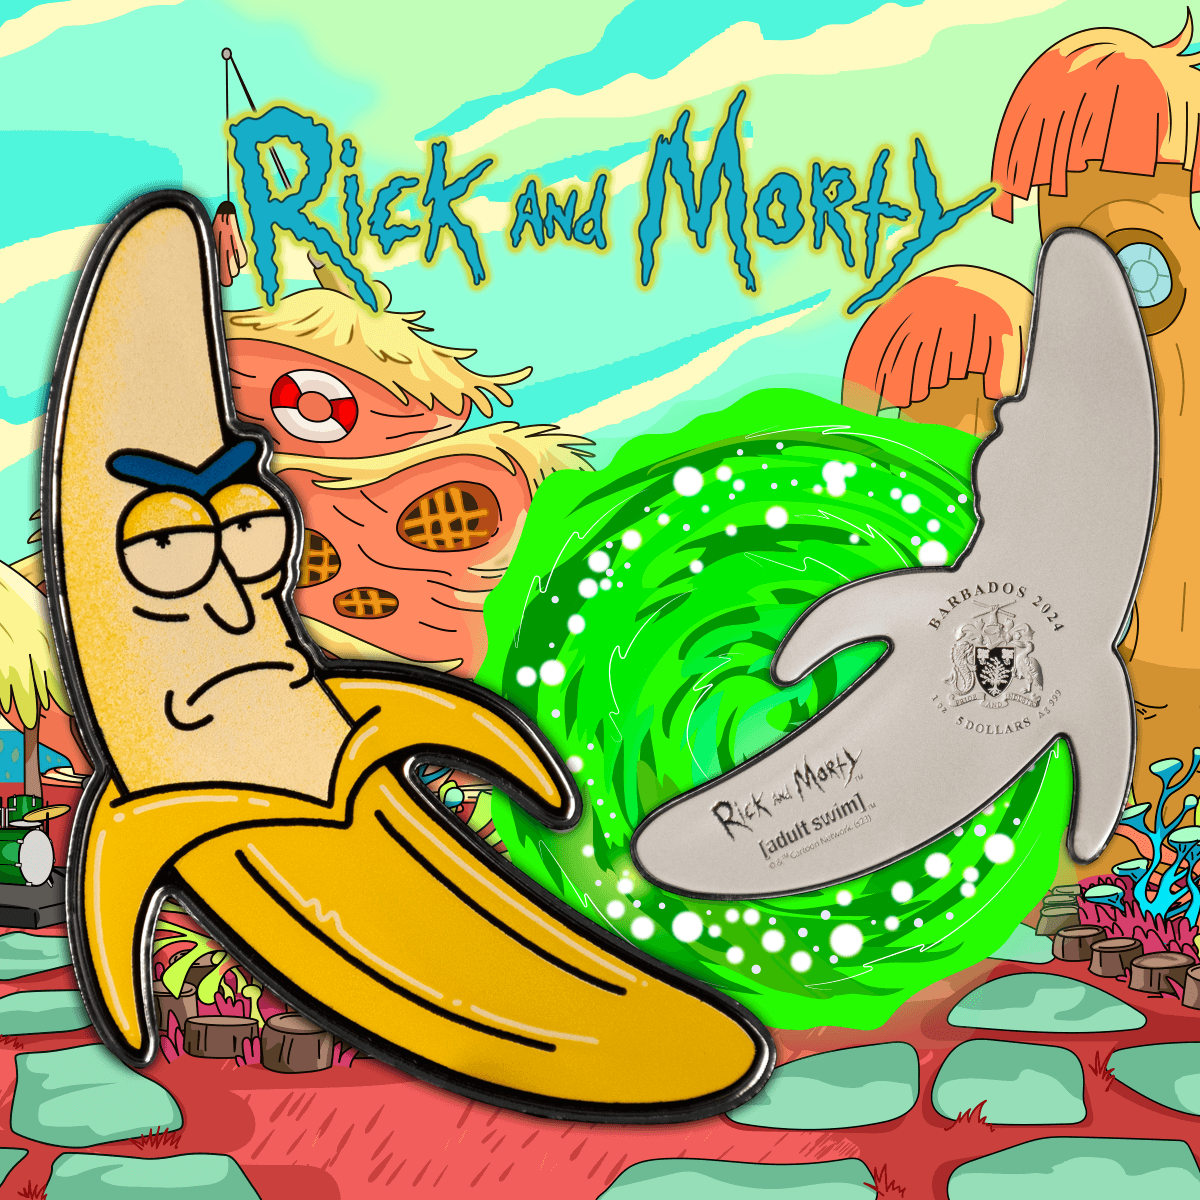 2024 Barbados Adult Swim Rick and Morty Banana Rick 1 oz Silver Colorized Coin Presale